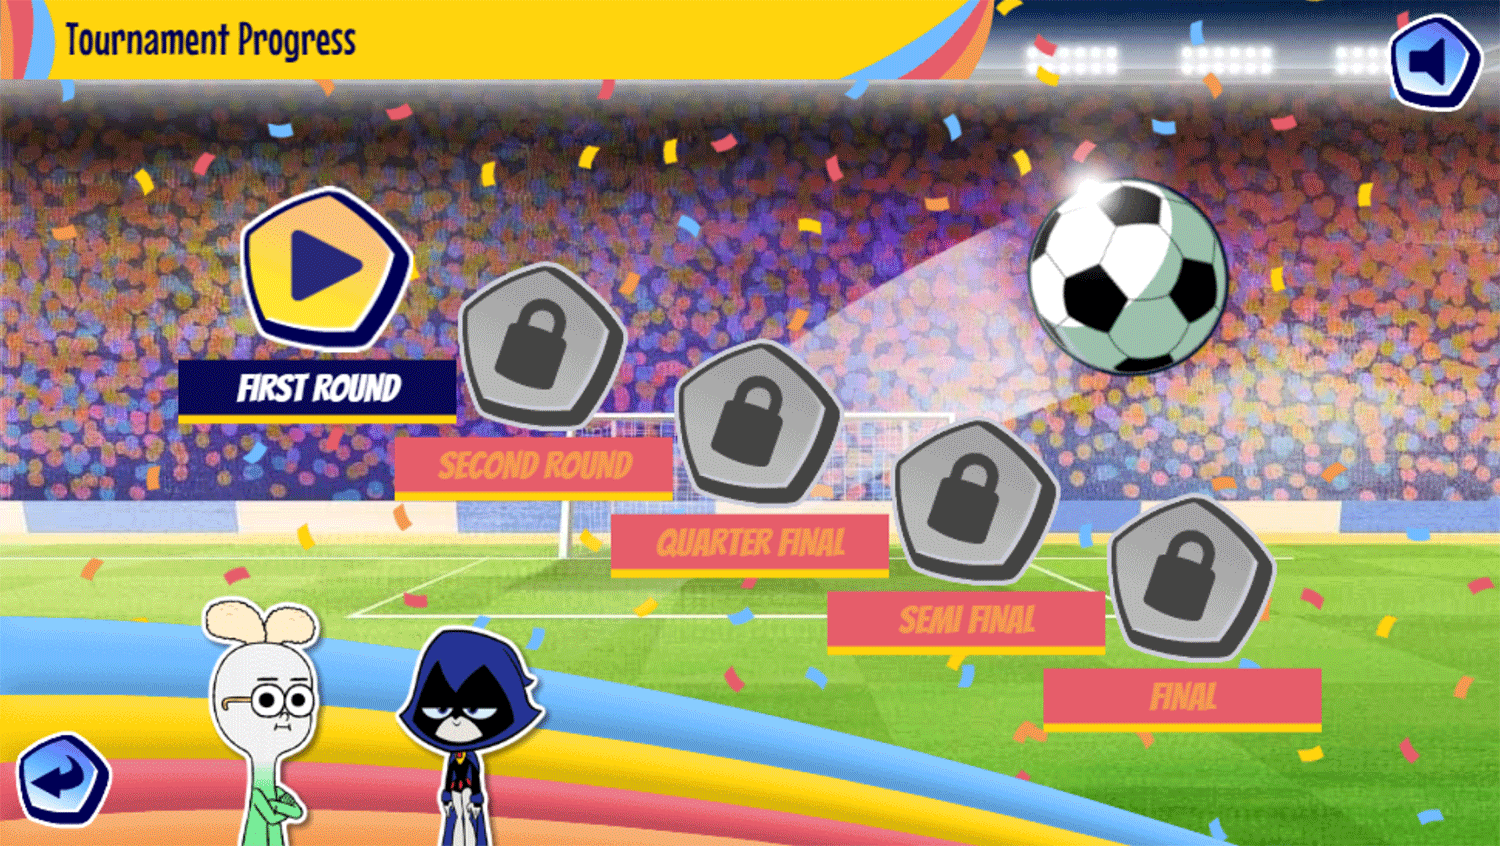 Penalty Power Game Tournament Progress Screenshot.